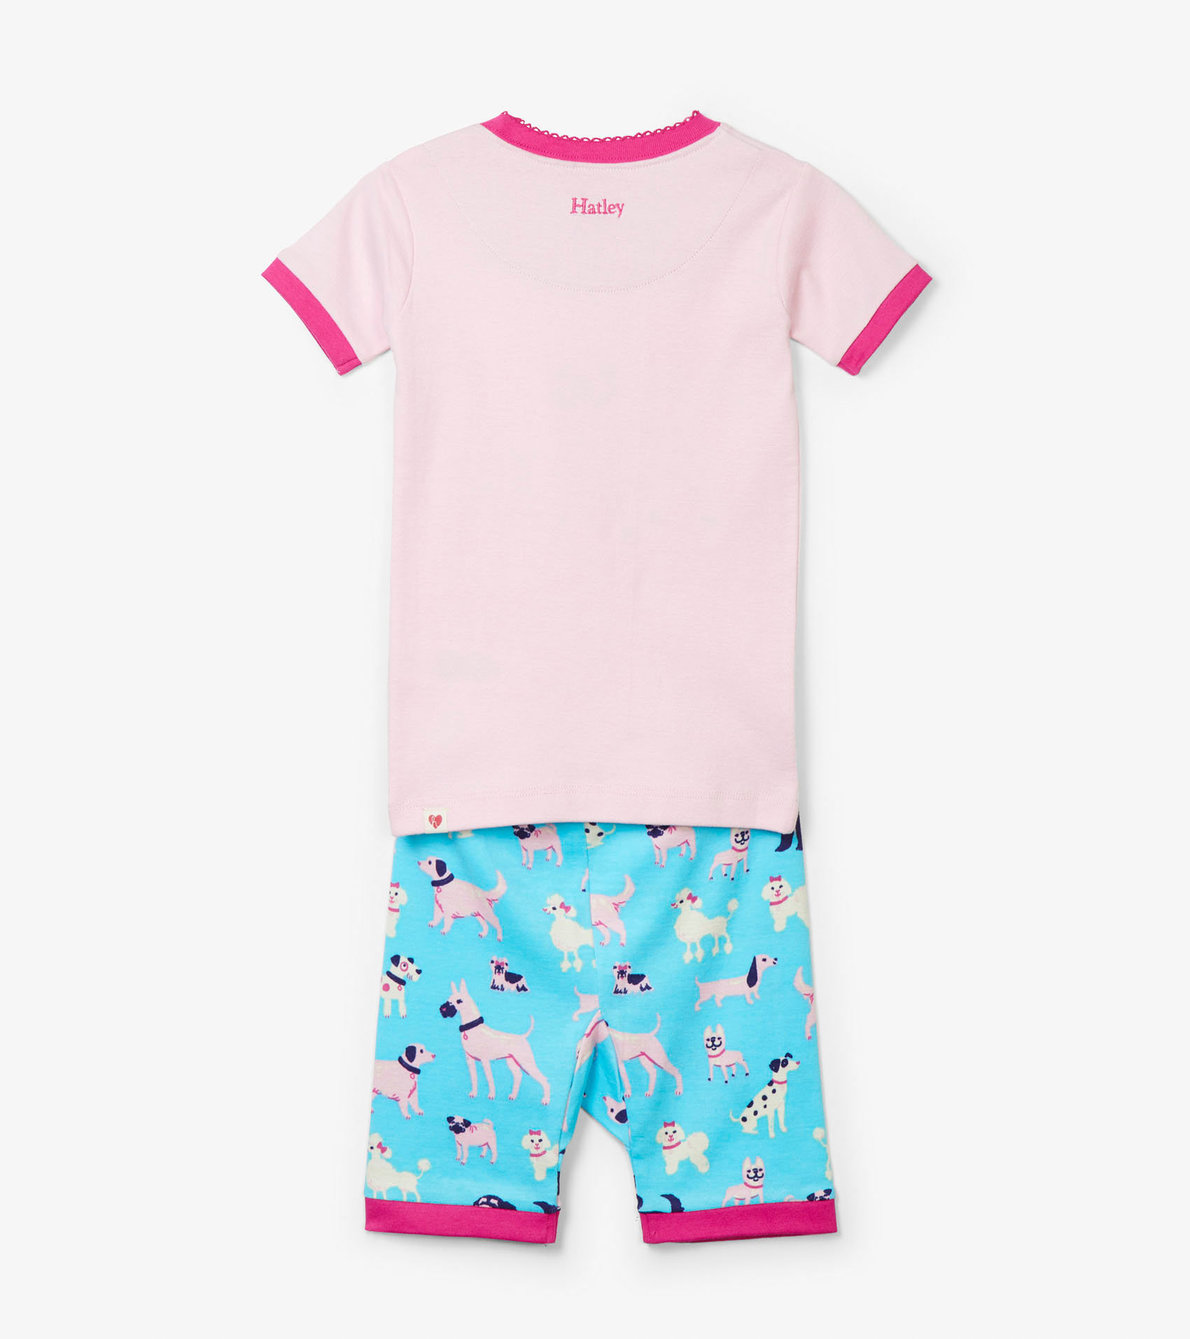 View larger image of Playful Pooches Appliqué Short Pajama Set